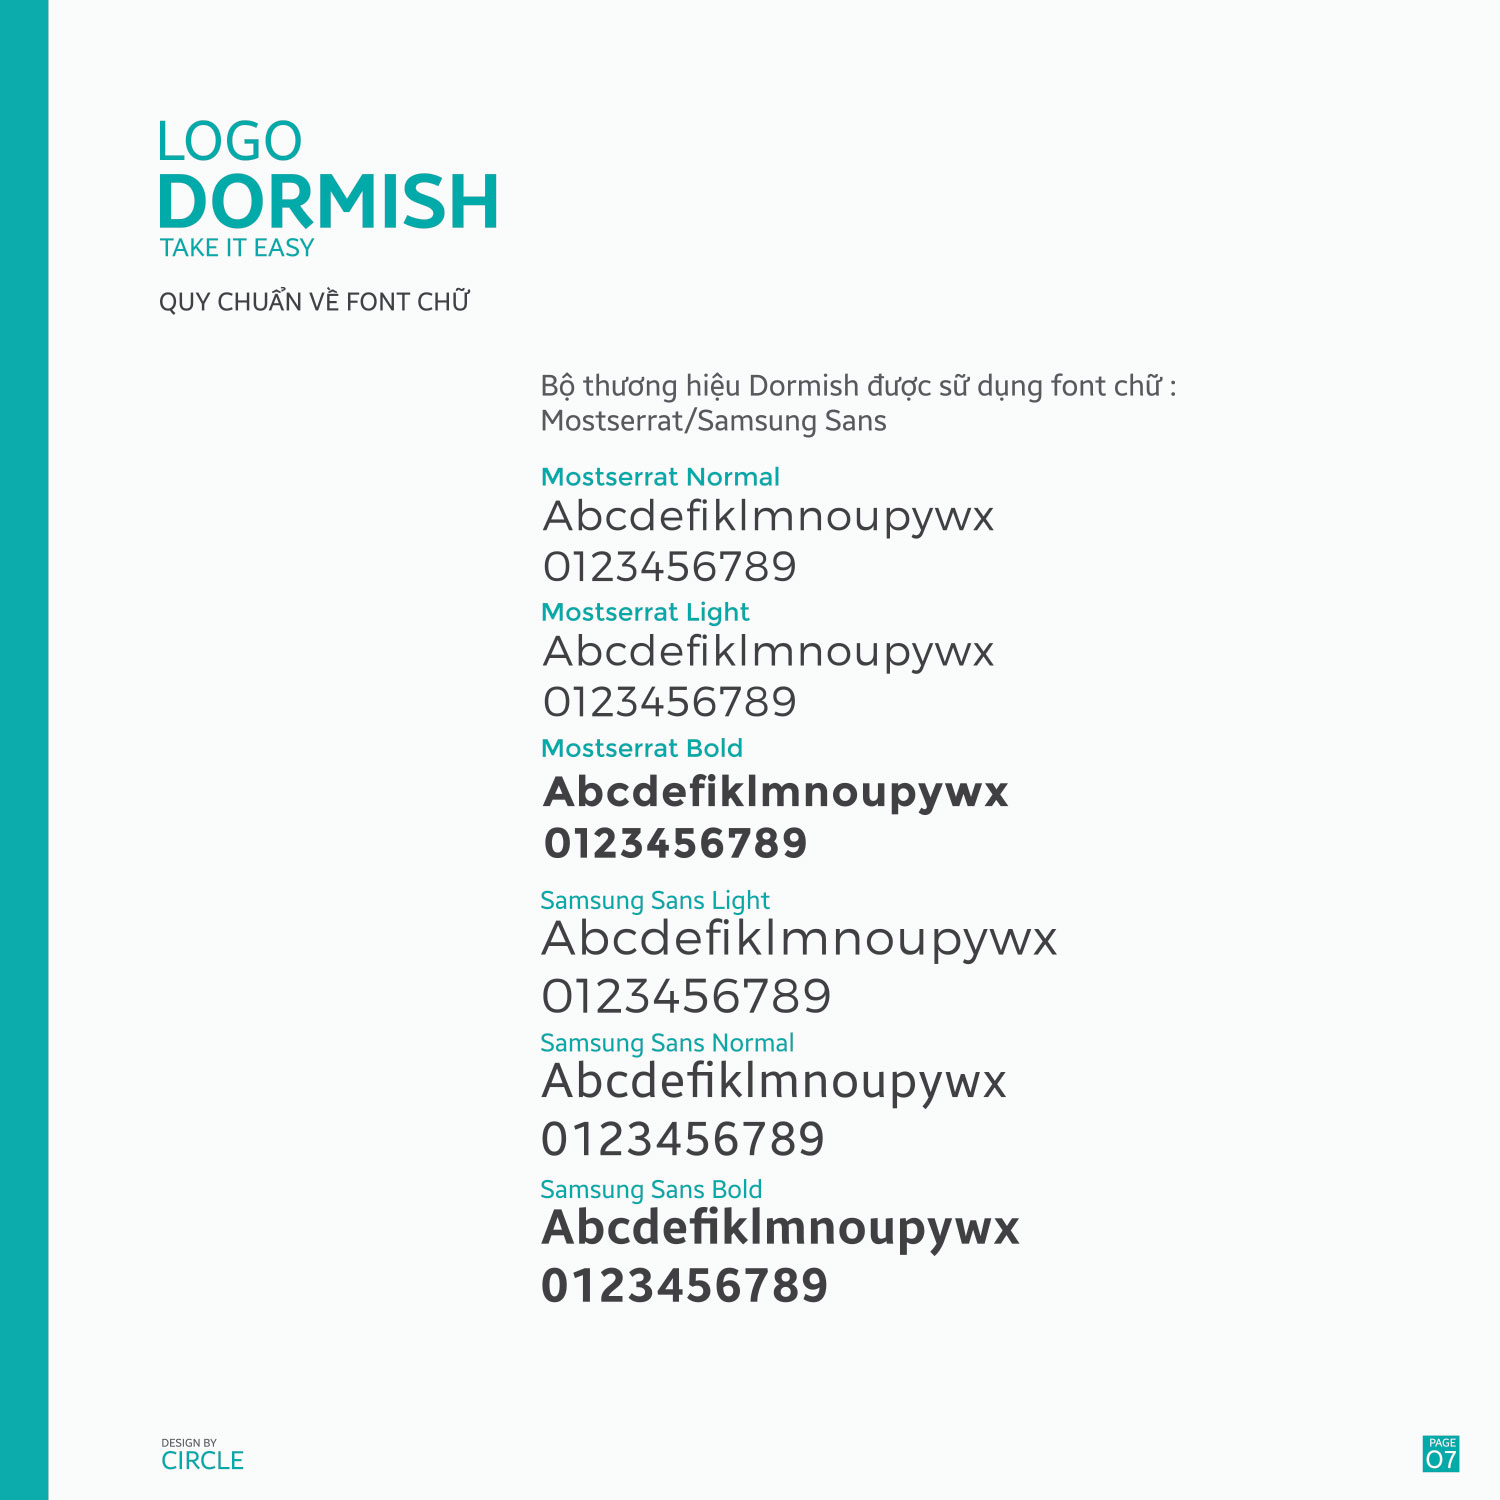 LOGO-DORMISH-FINAL-15.04-2